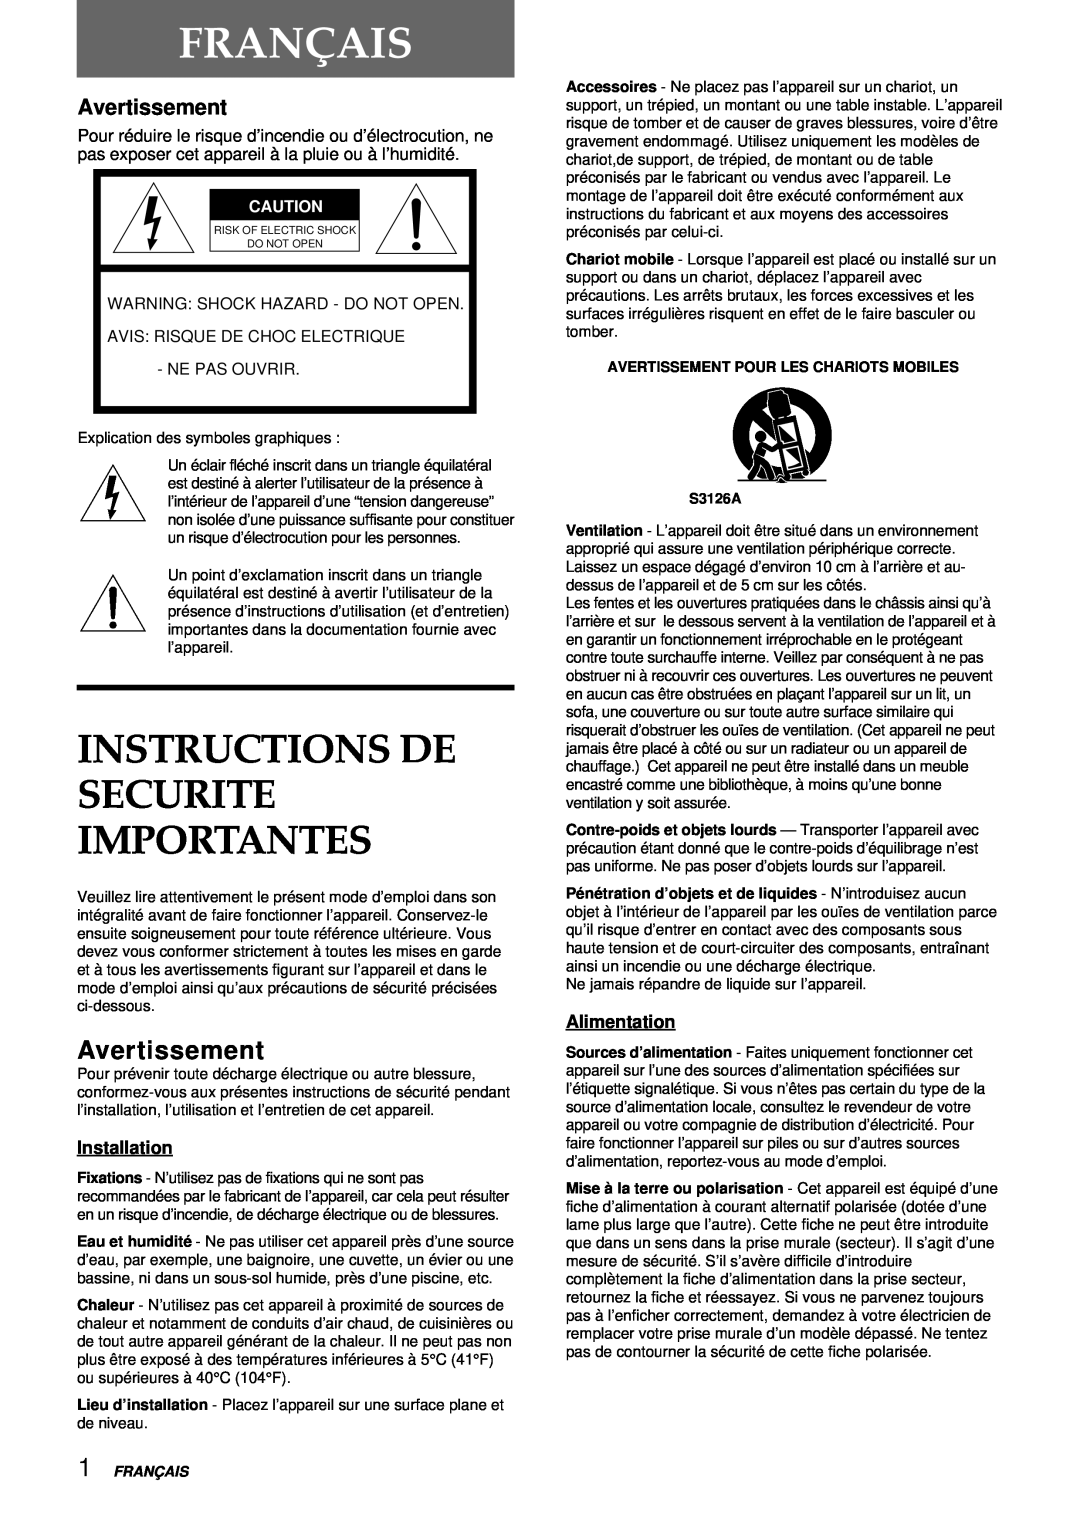 Aiwa VX-S137U, VX-S207U manual Français, Instructions De Securite Importantes, Avertissement, Installation, Alimentation 